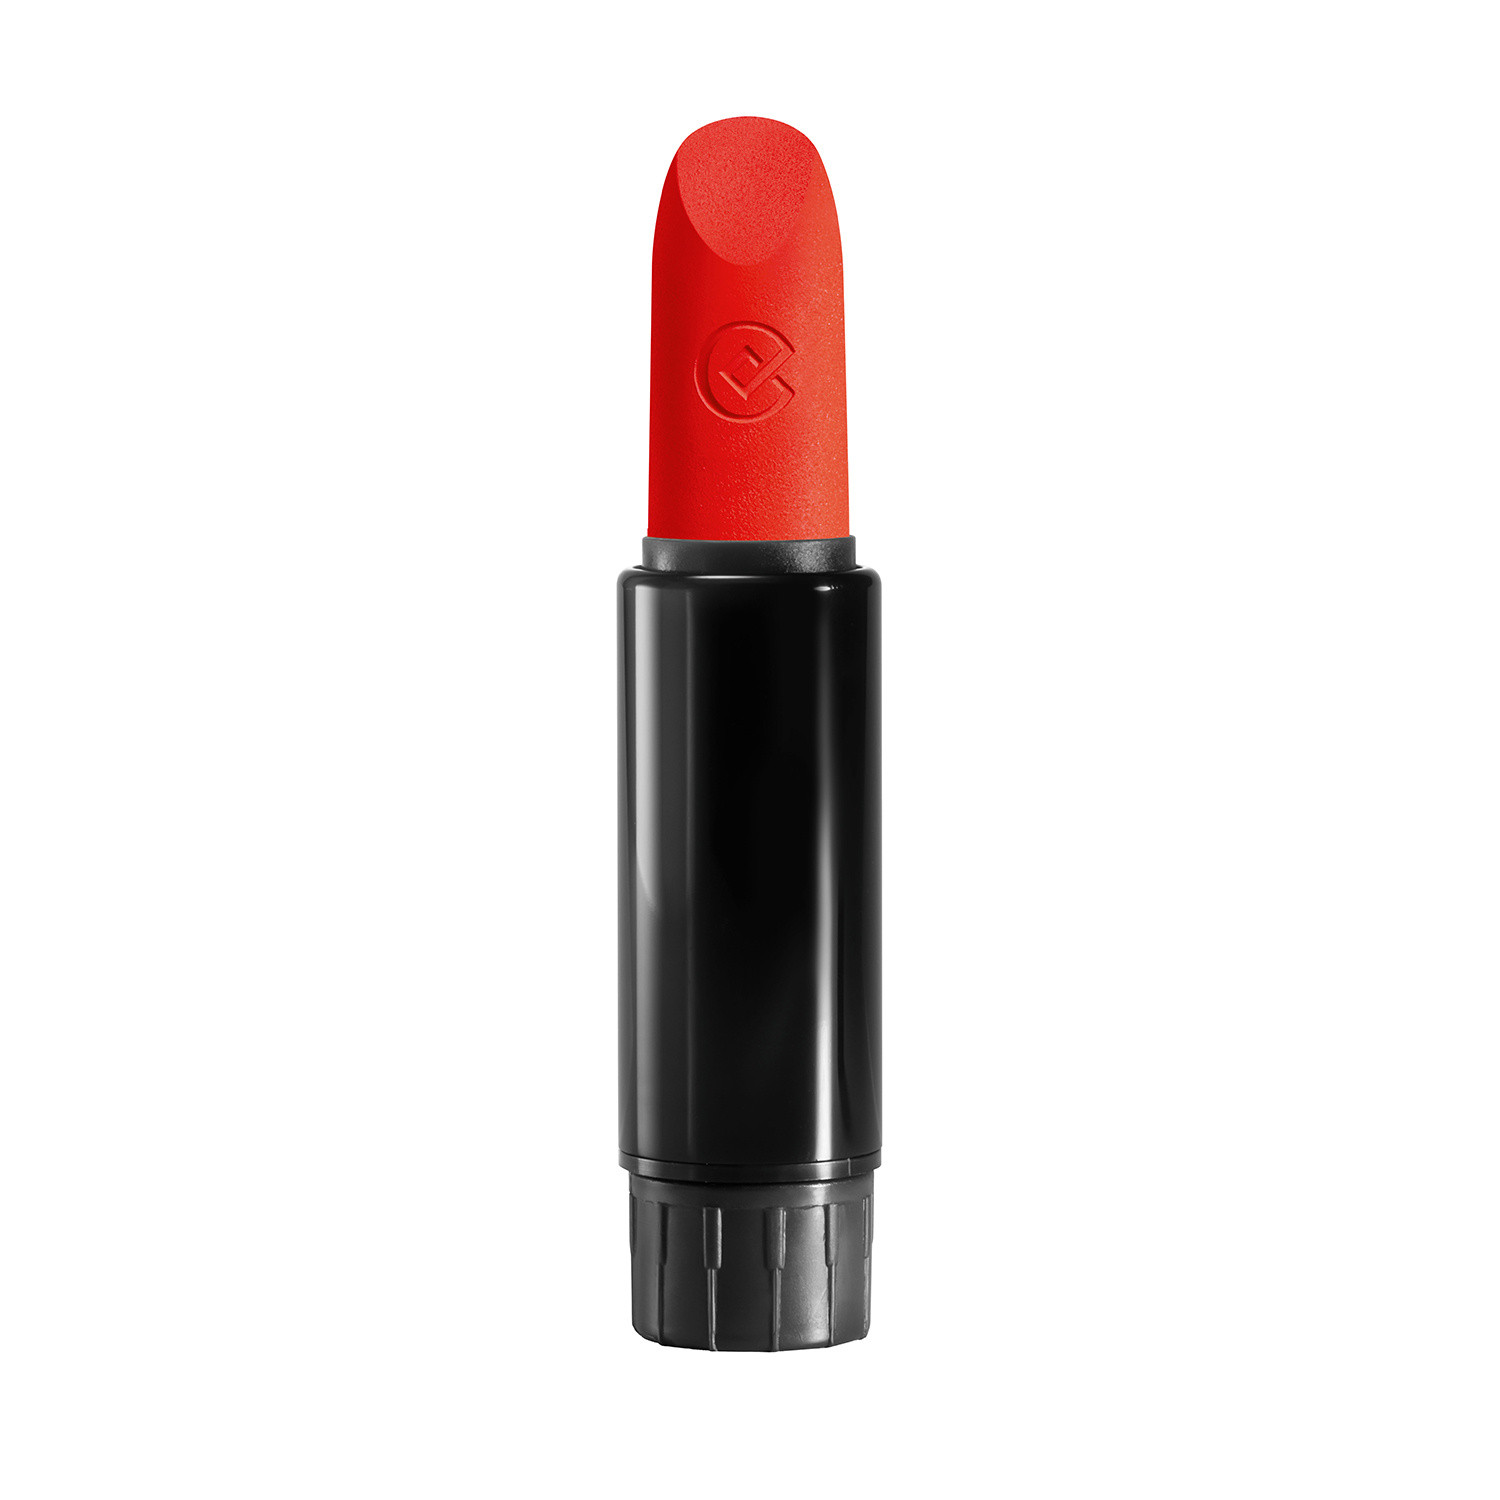 Collistar - Pure matte lipstick refill - 40 Mandarin, Orange, large image number 0